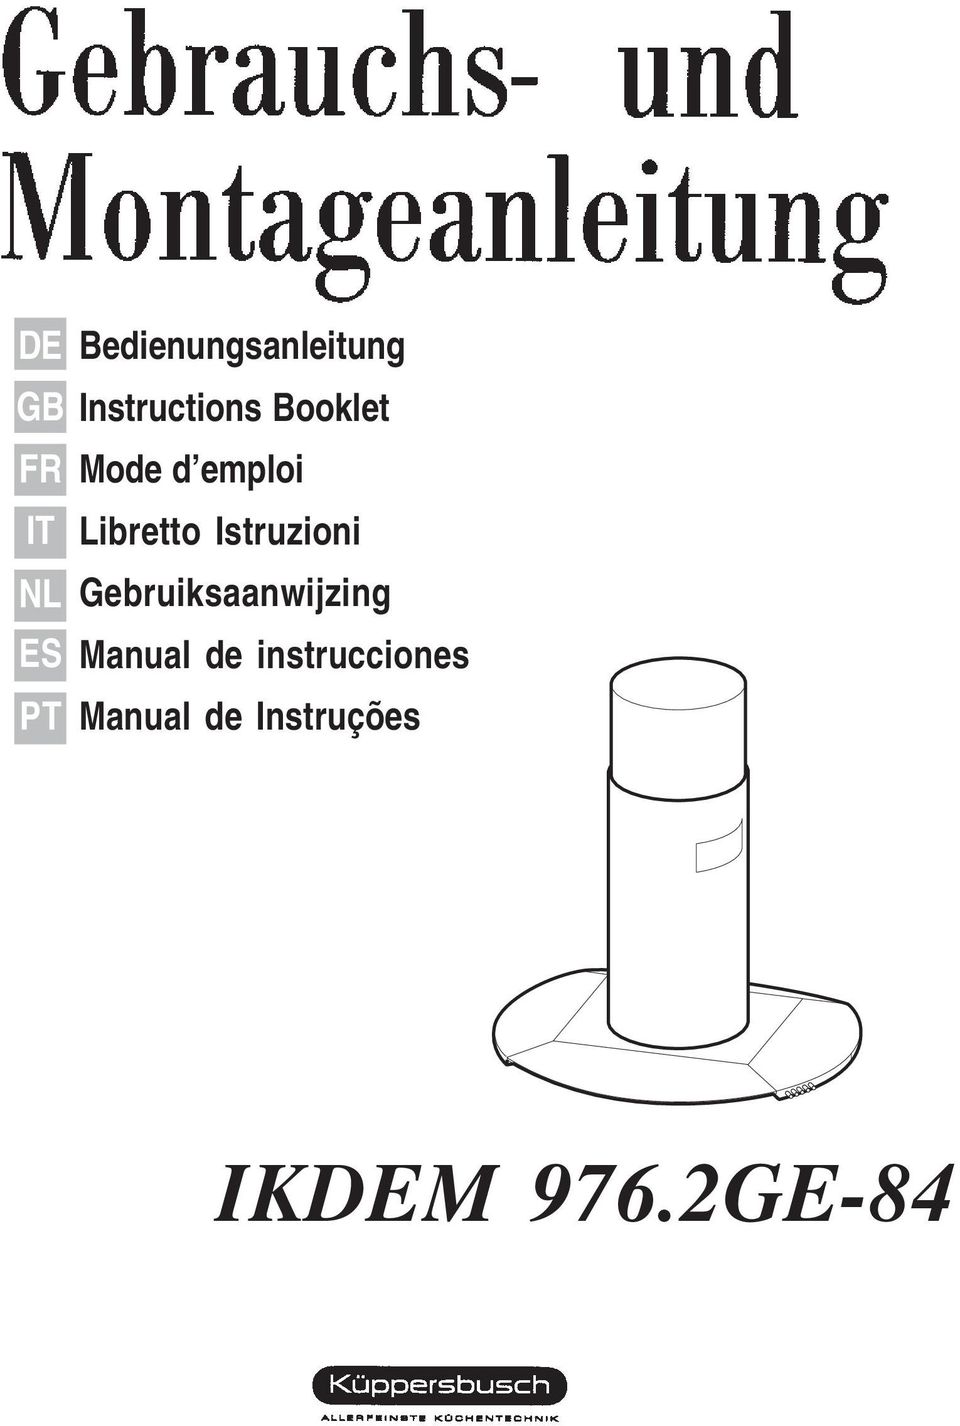 Istruzioni NL Gebruiksaanwijzing ES Manual